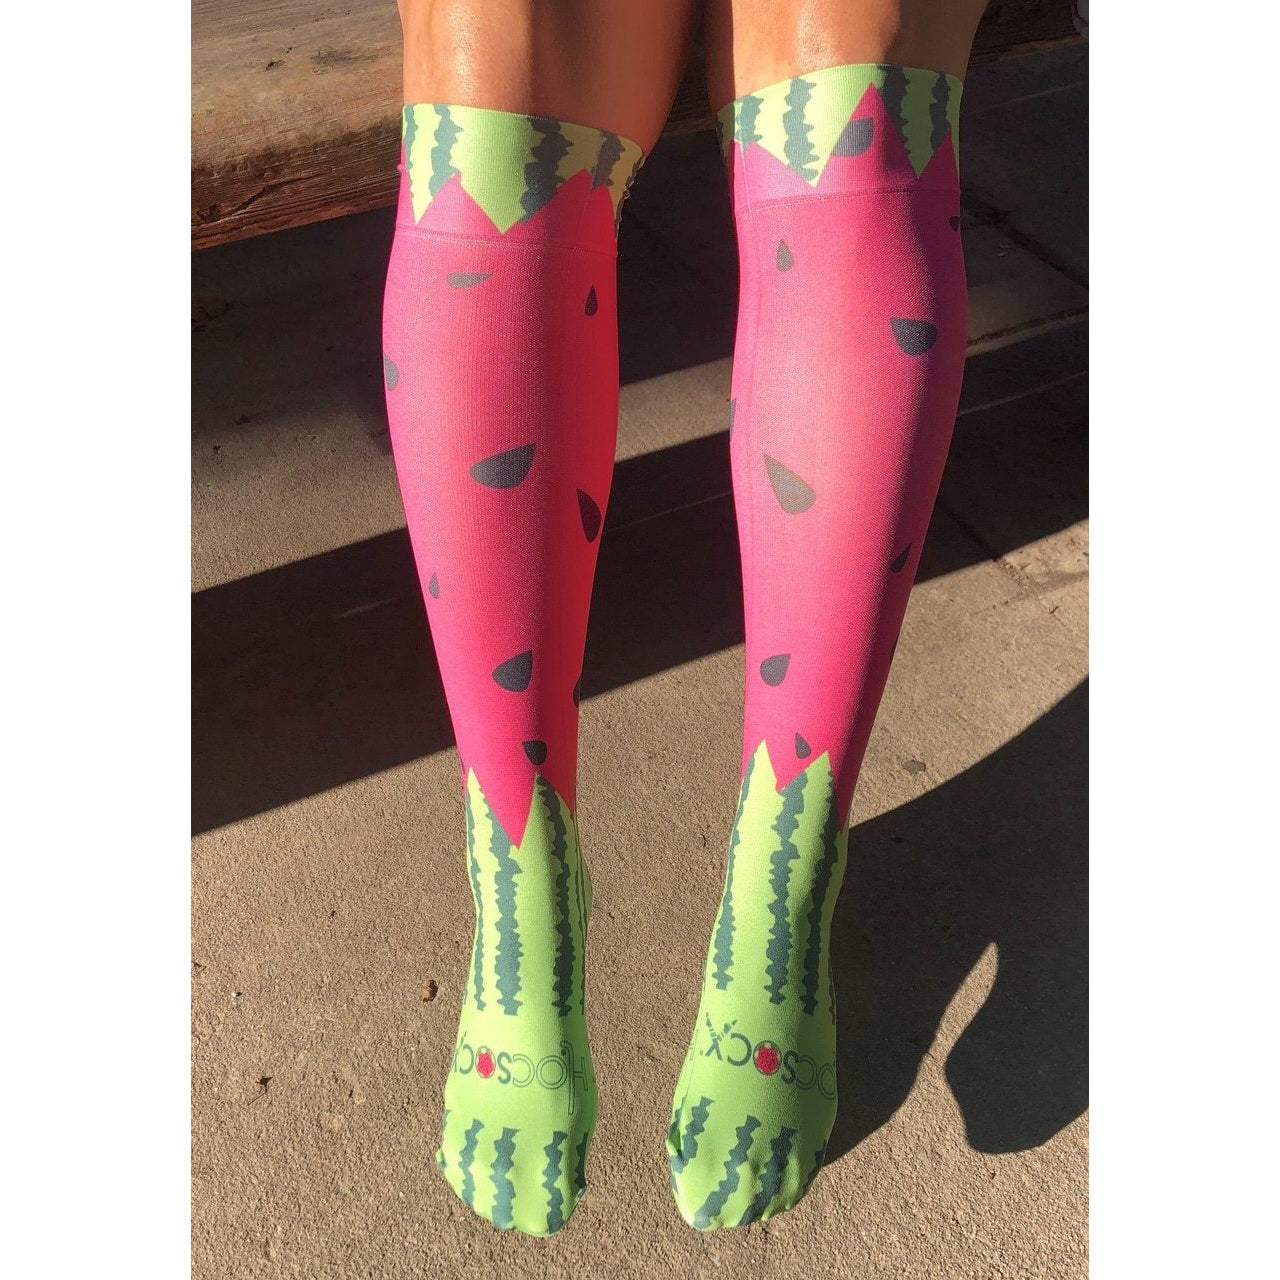 Hocsocx Watermelon Socks